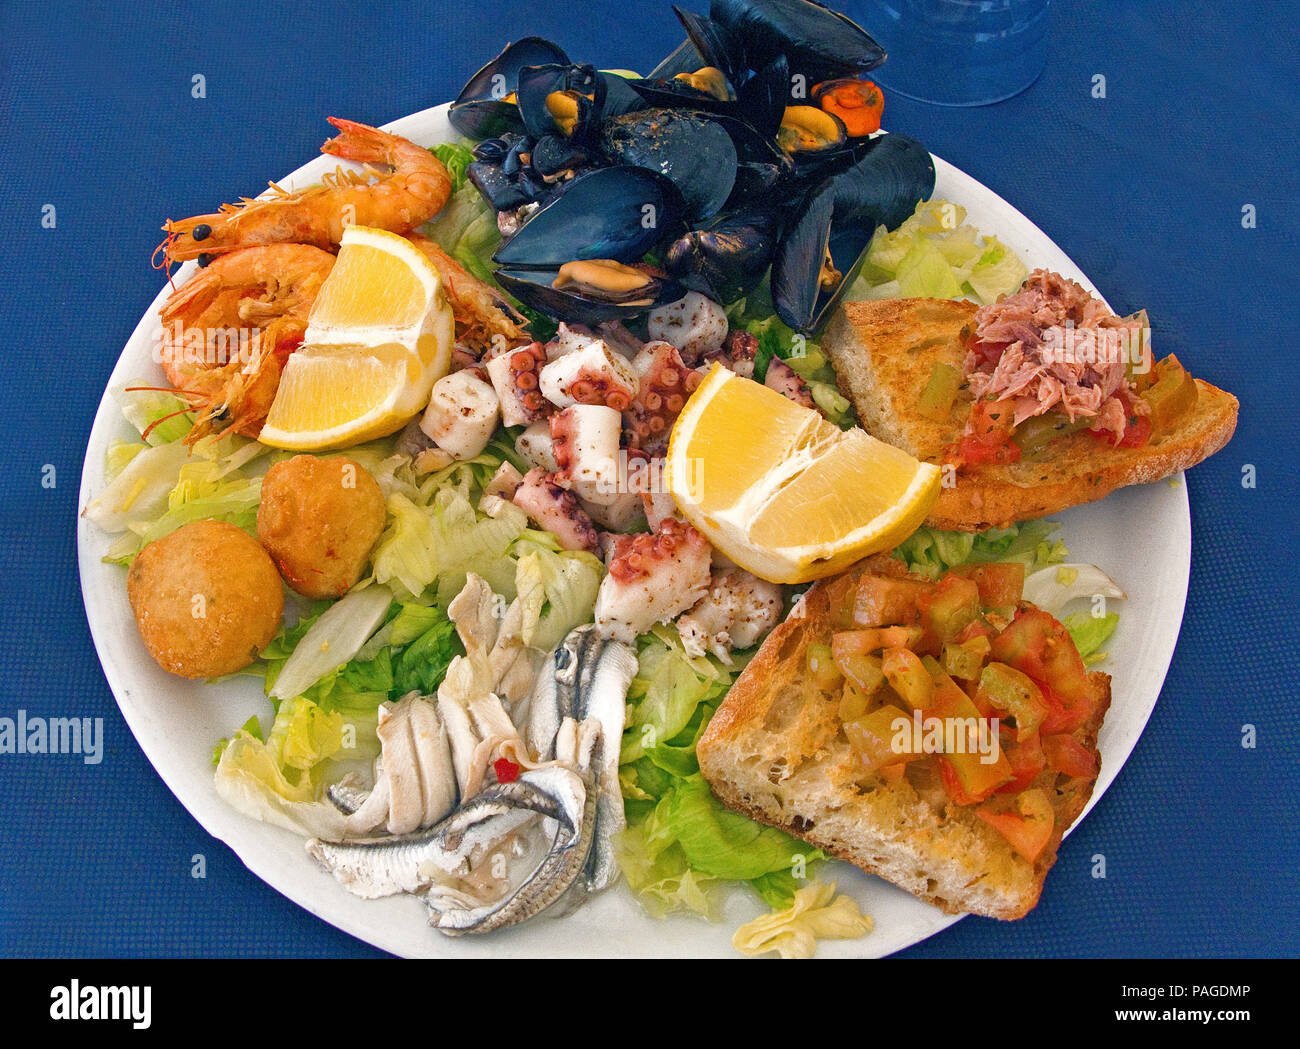 Frutti di mare, Antipasti (Starter), authentisch Italienisch Essen im Hafen Restaurant, Marina di Corricella, Procida, Golf von Neapel, Italien Stockfoto